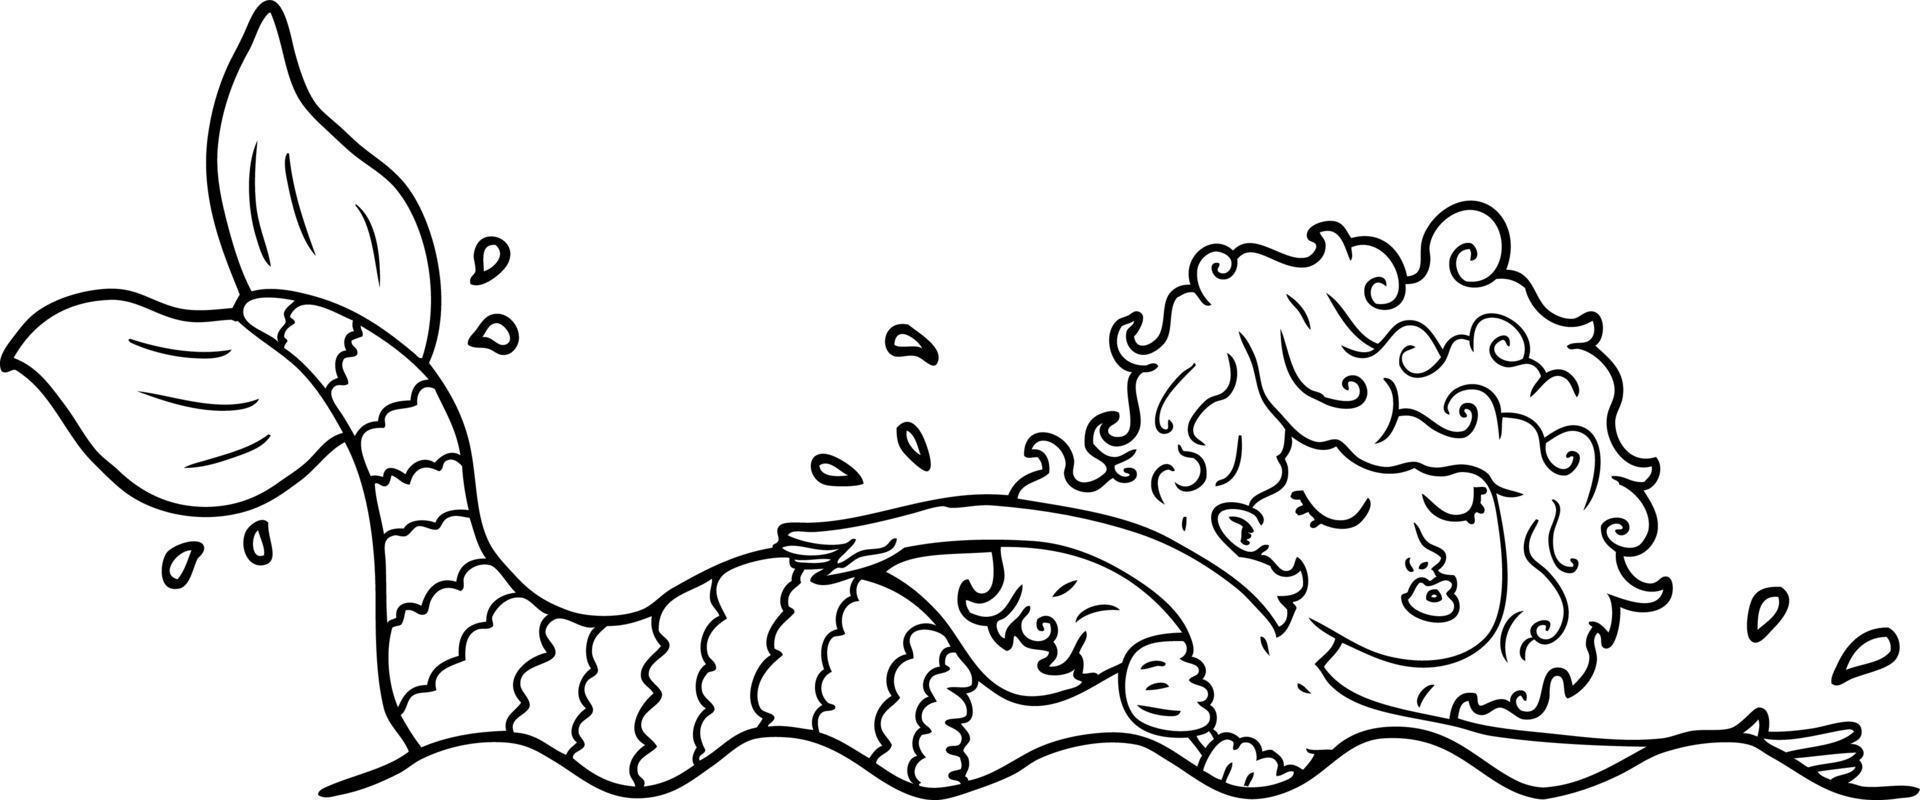 line drawing cartoon cartoon mermaid vector